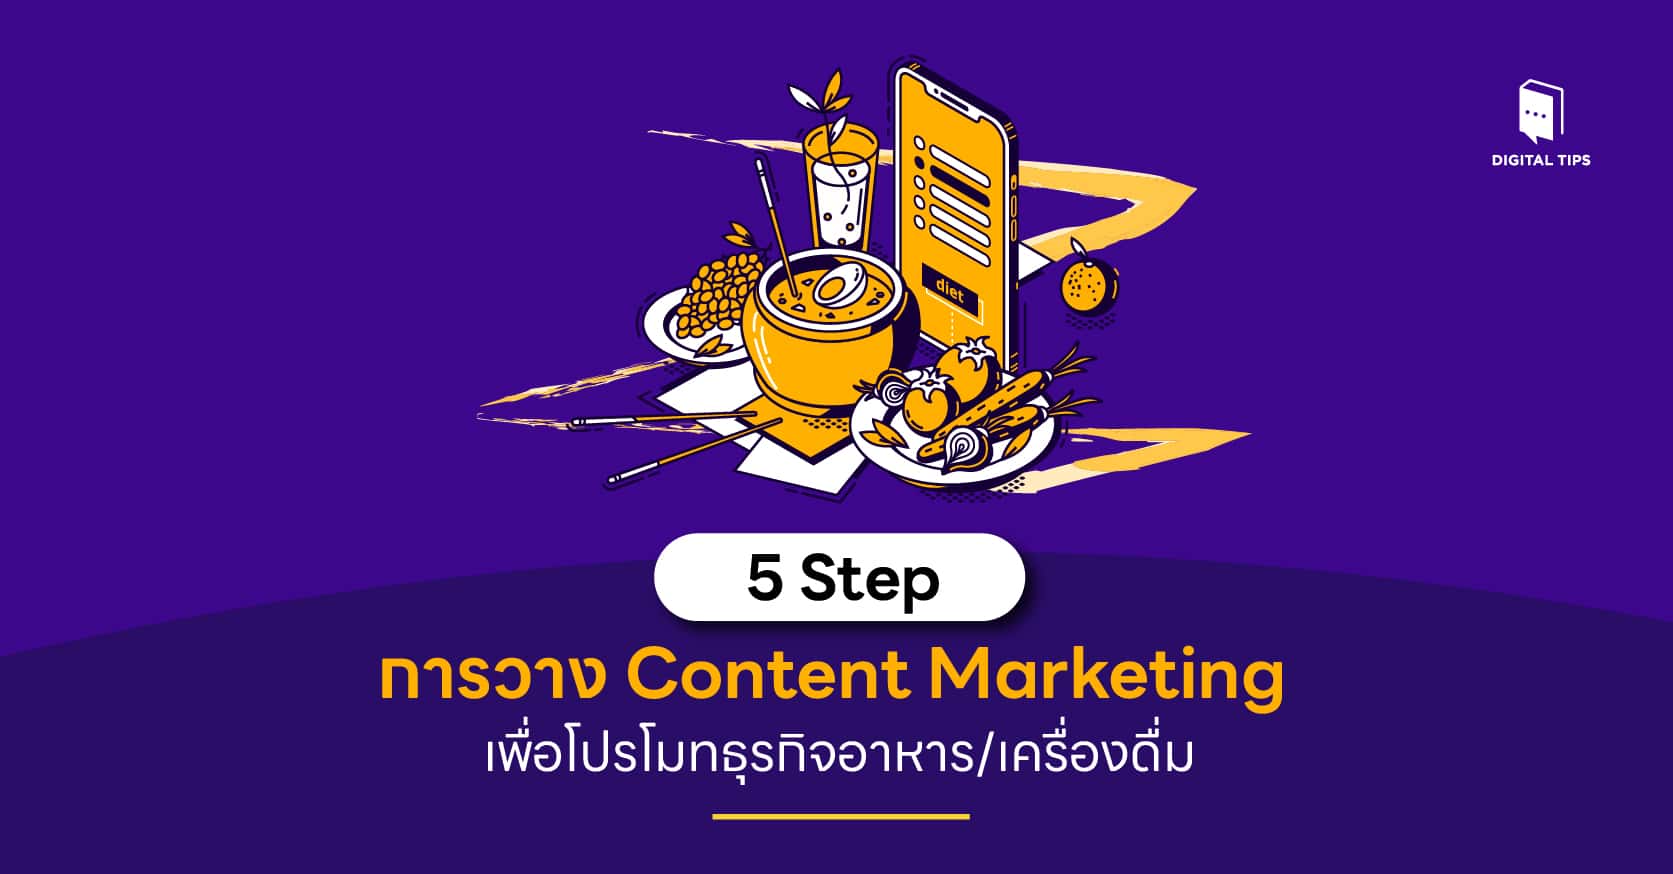 5 Step การวาง Content Marketing เพื่อโปรโมทธุรกิจอาหาร/เครื่องดื่ม